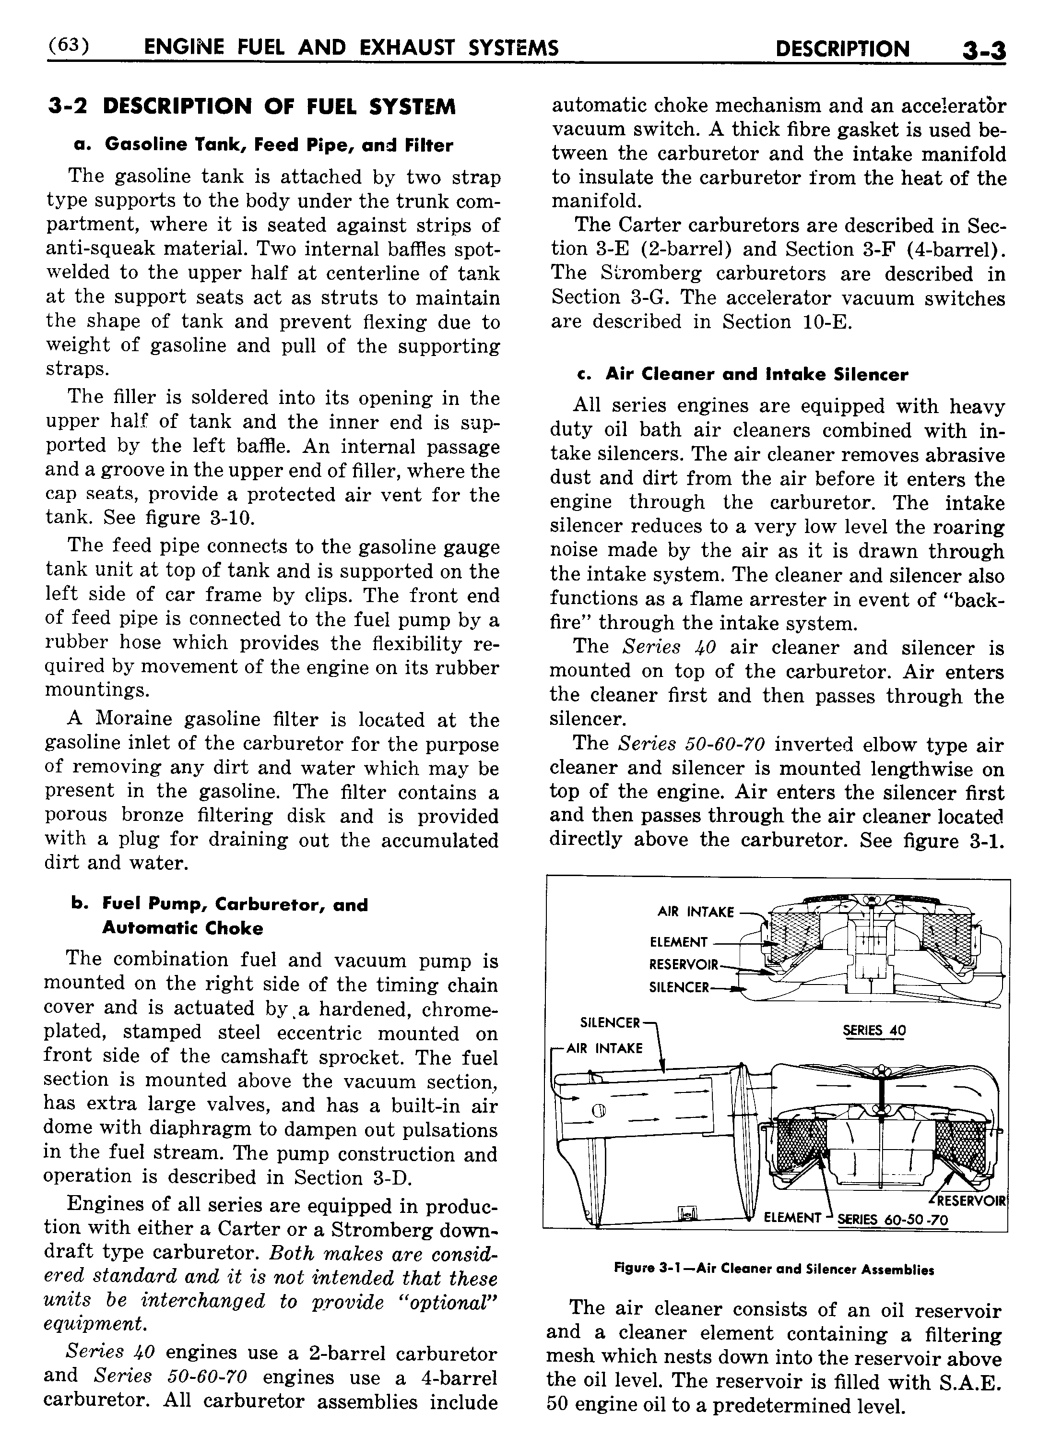 n_04 1955 Buick Shop Manual - Engine Fuel & Exhaust-003-003.jpg